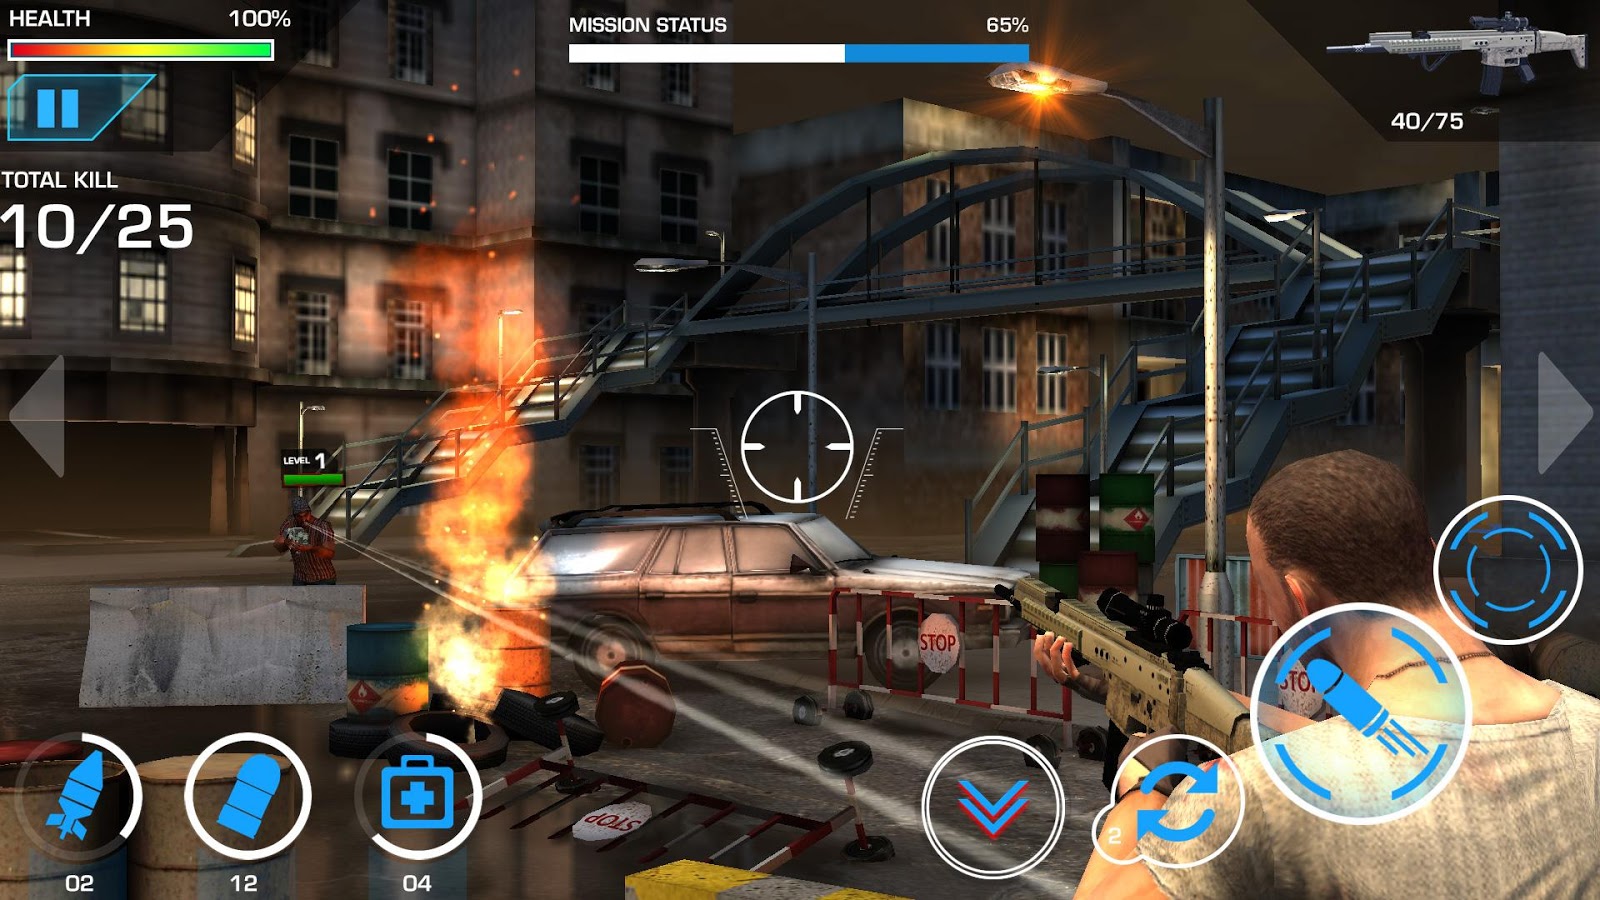 2game-Combat-Elite-Border-Wars-mobile-4.jpg (1600×900)